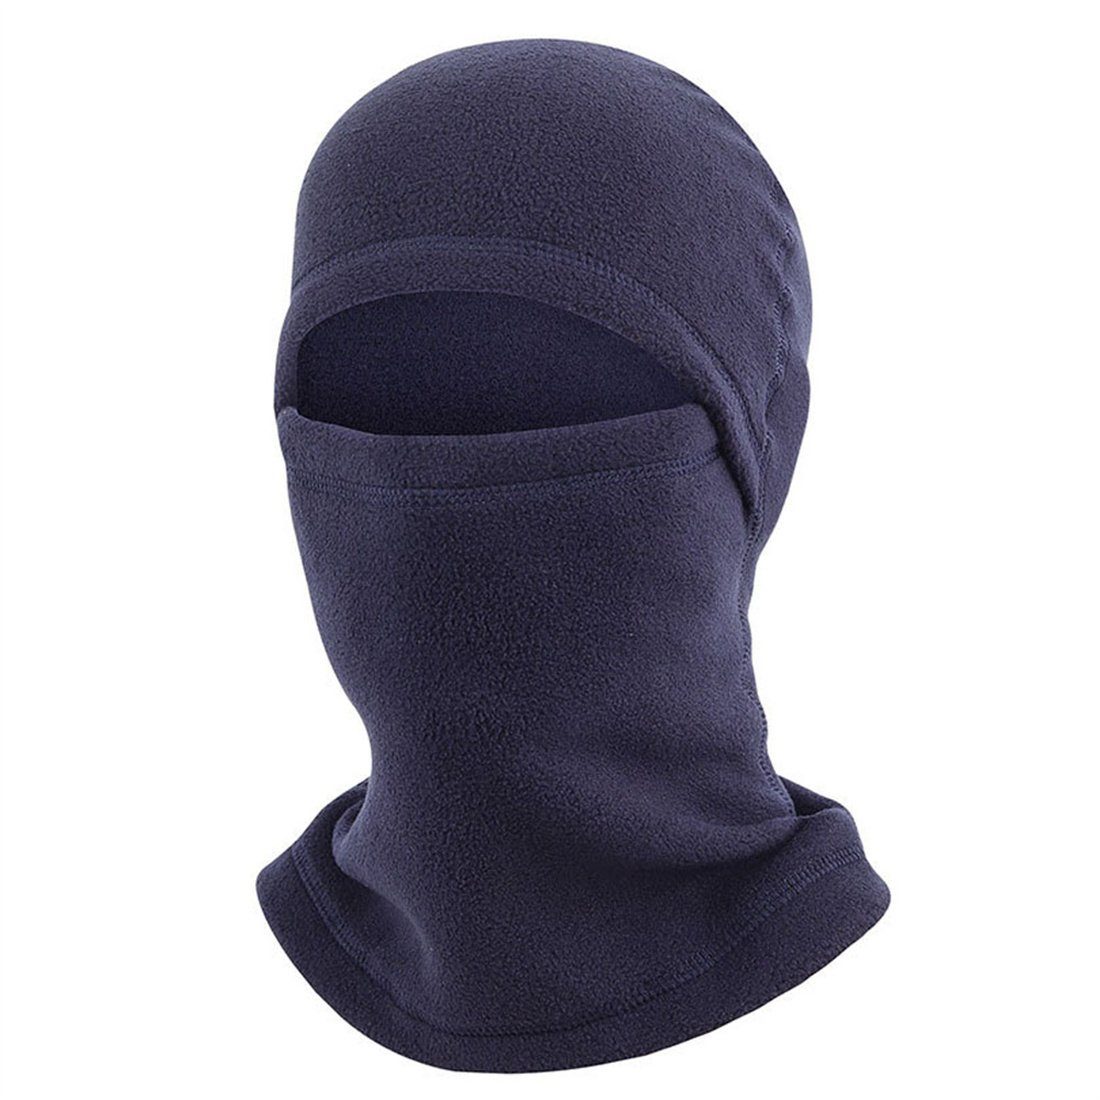 Winter Maske,Multifunktionale Kopfbedeckung Sturmhaube Coldproof Warme Reiten blau DÖRÖY Ski